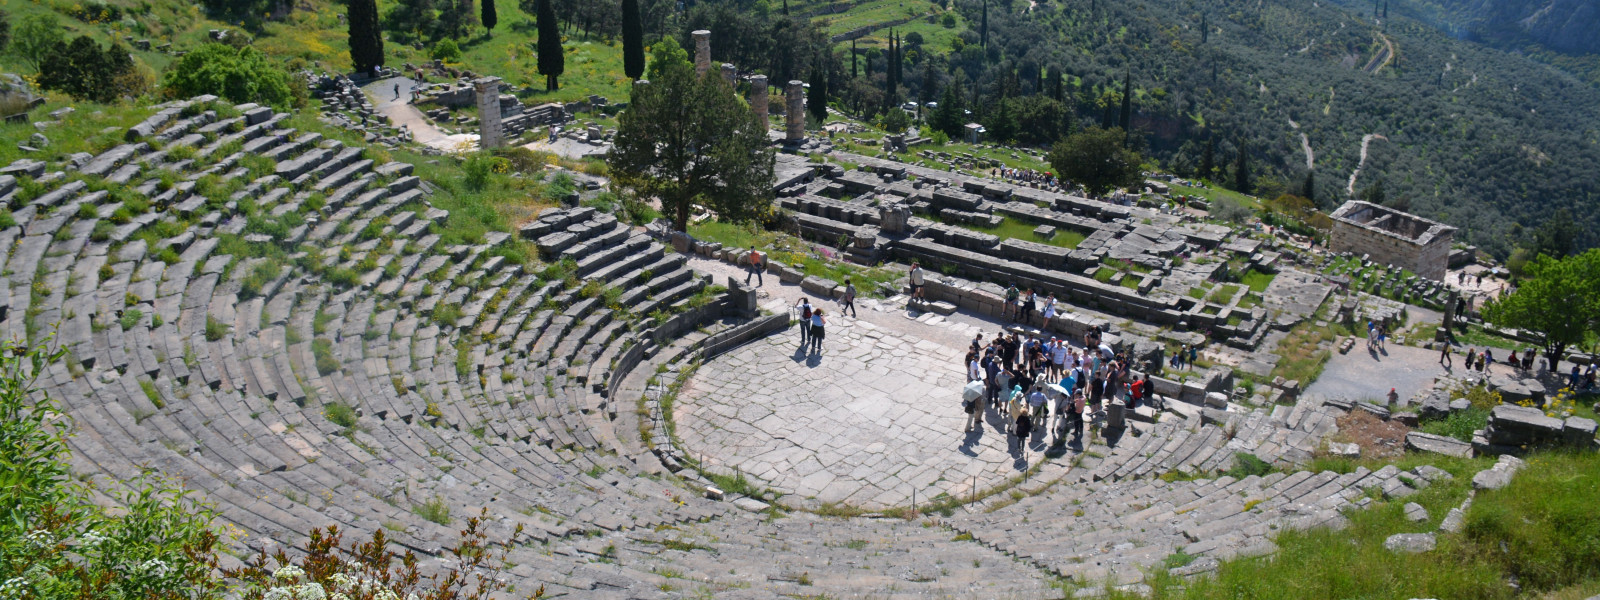 Delphi: the theater and the temple of Apollo